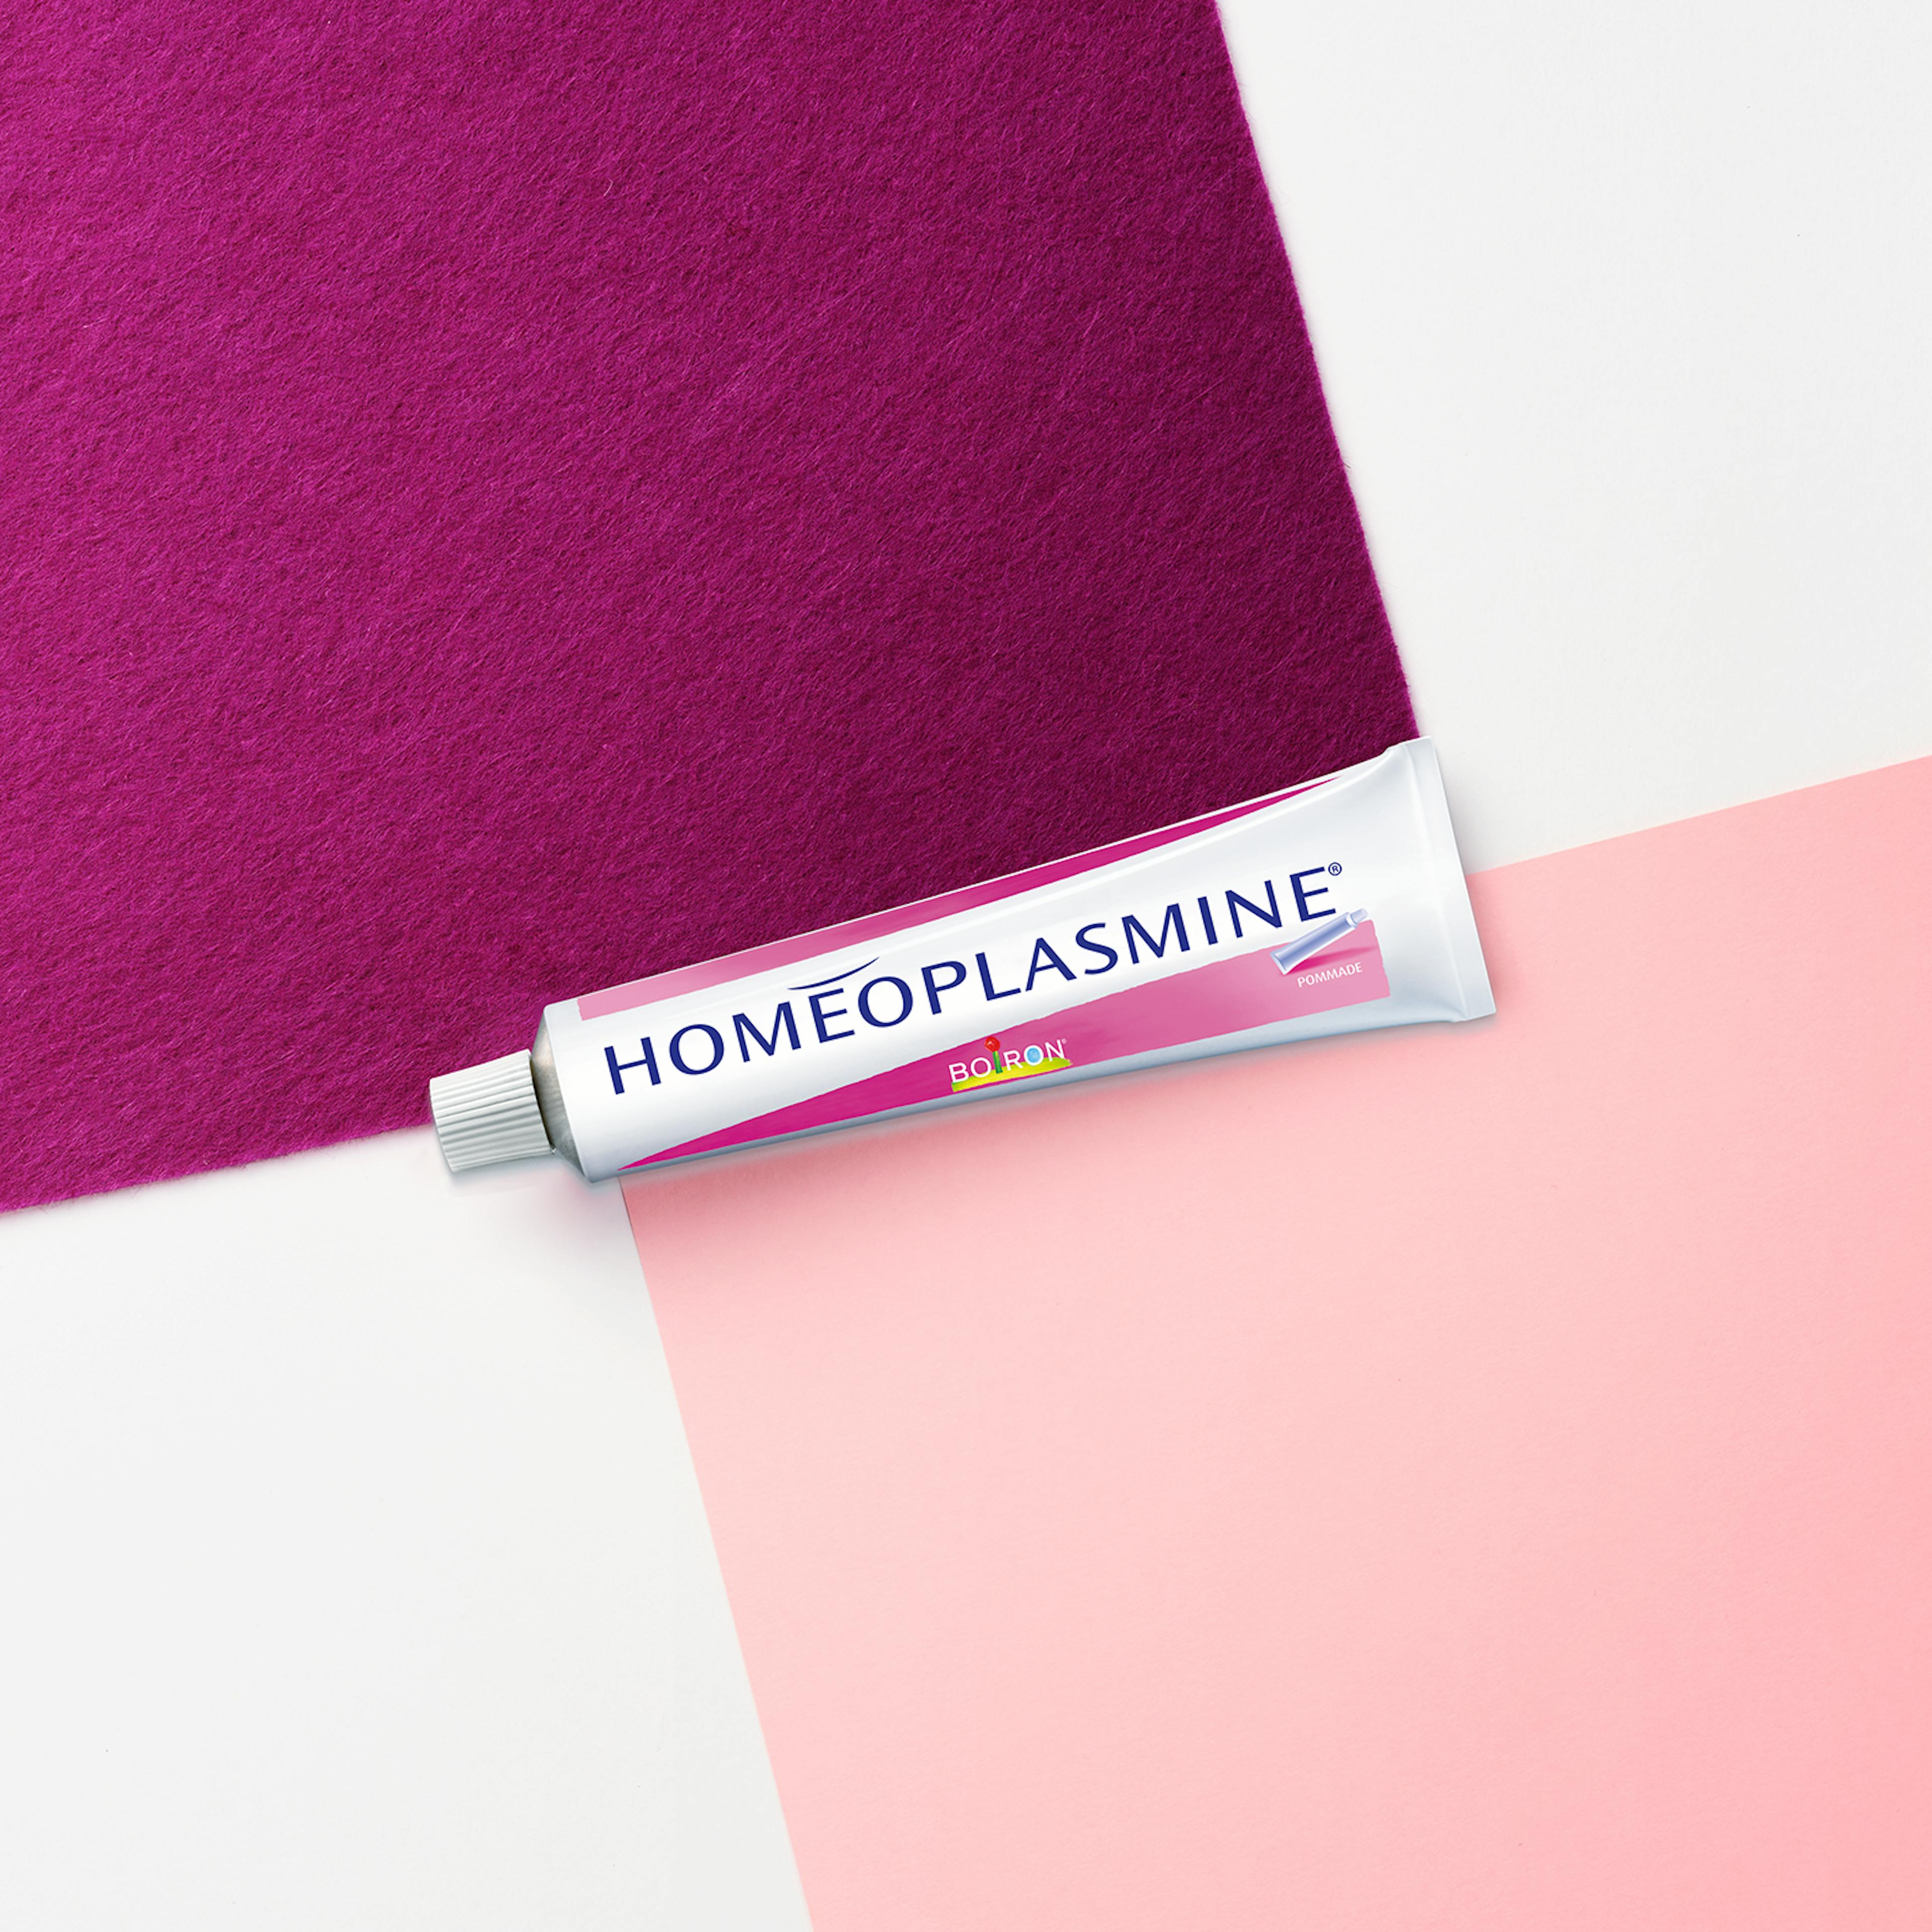 Homeoplasmine | Peau Irritée | Boiron : N°1 de l’Homéopathie